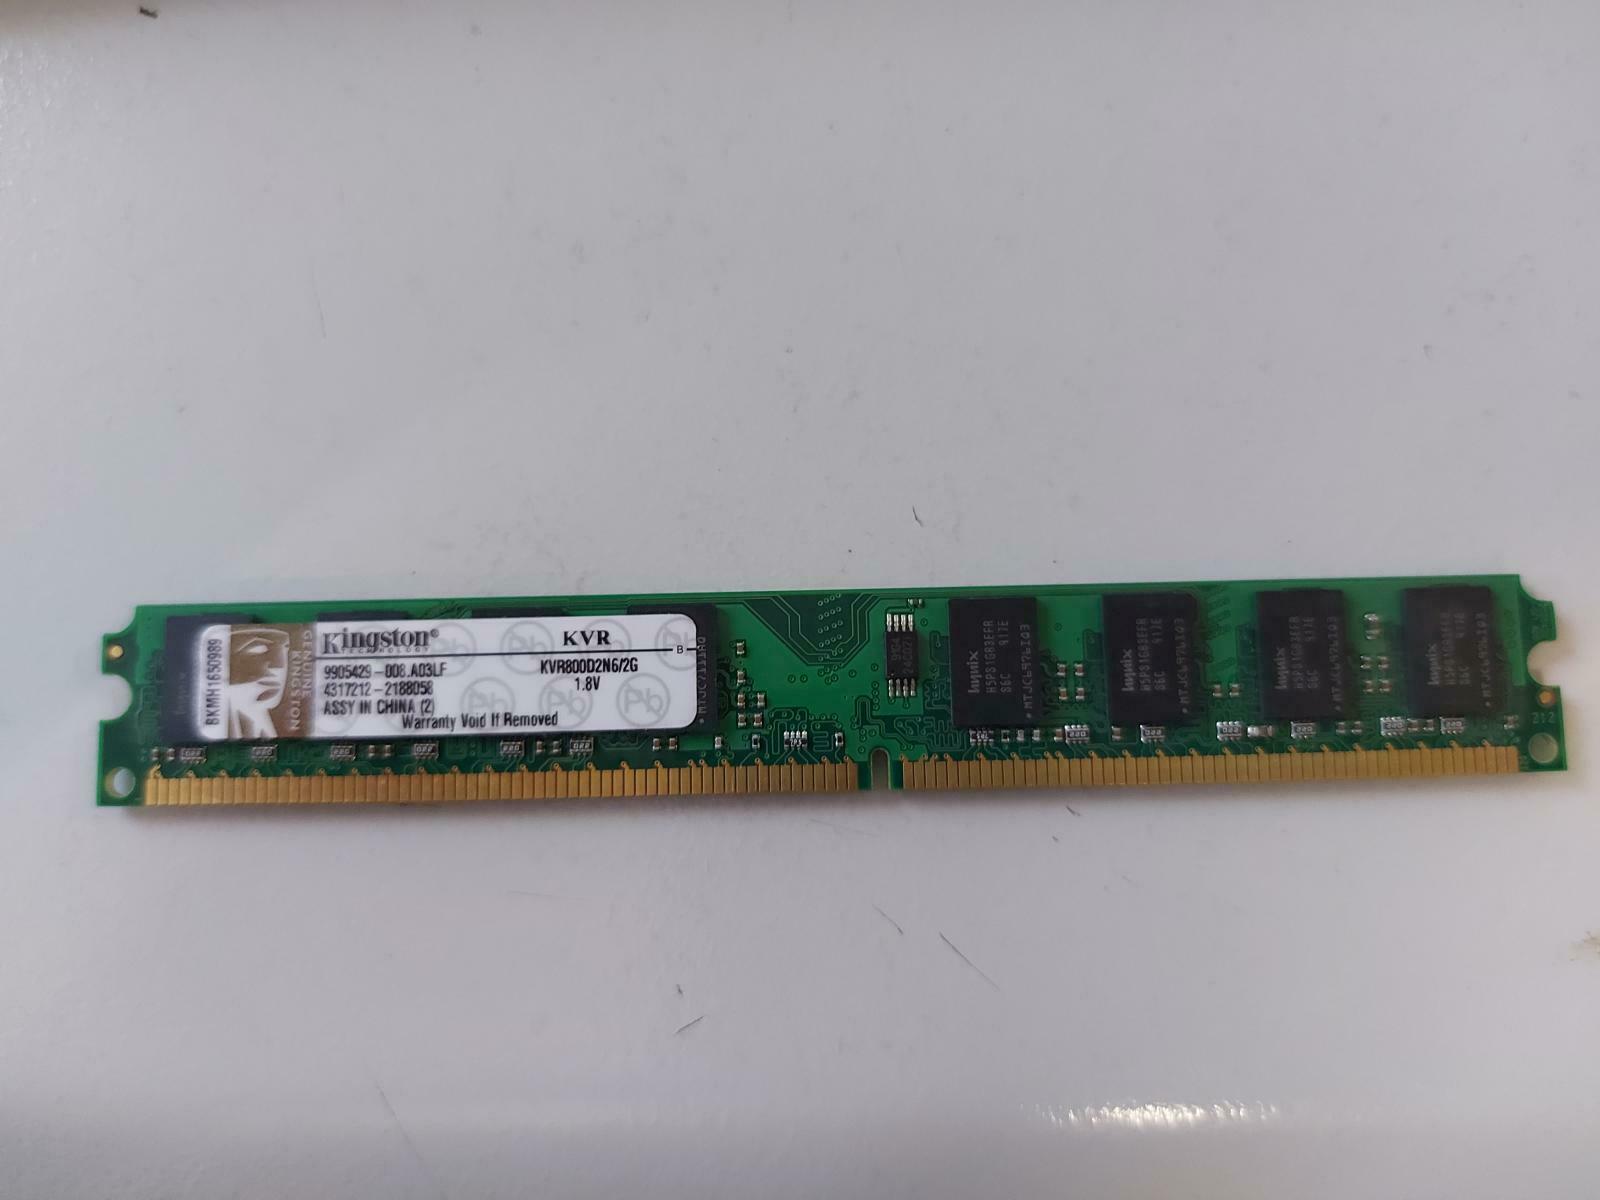 Kingston 2GB DDR2 PC26400 UNBUFFERED NONECC CL6 240PIN KVR800D2N6/2G 9905429-008